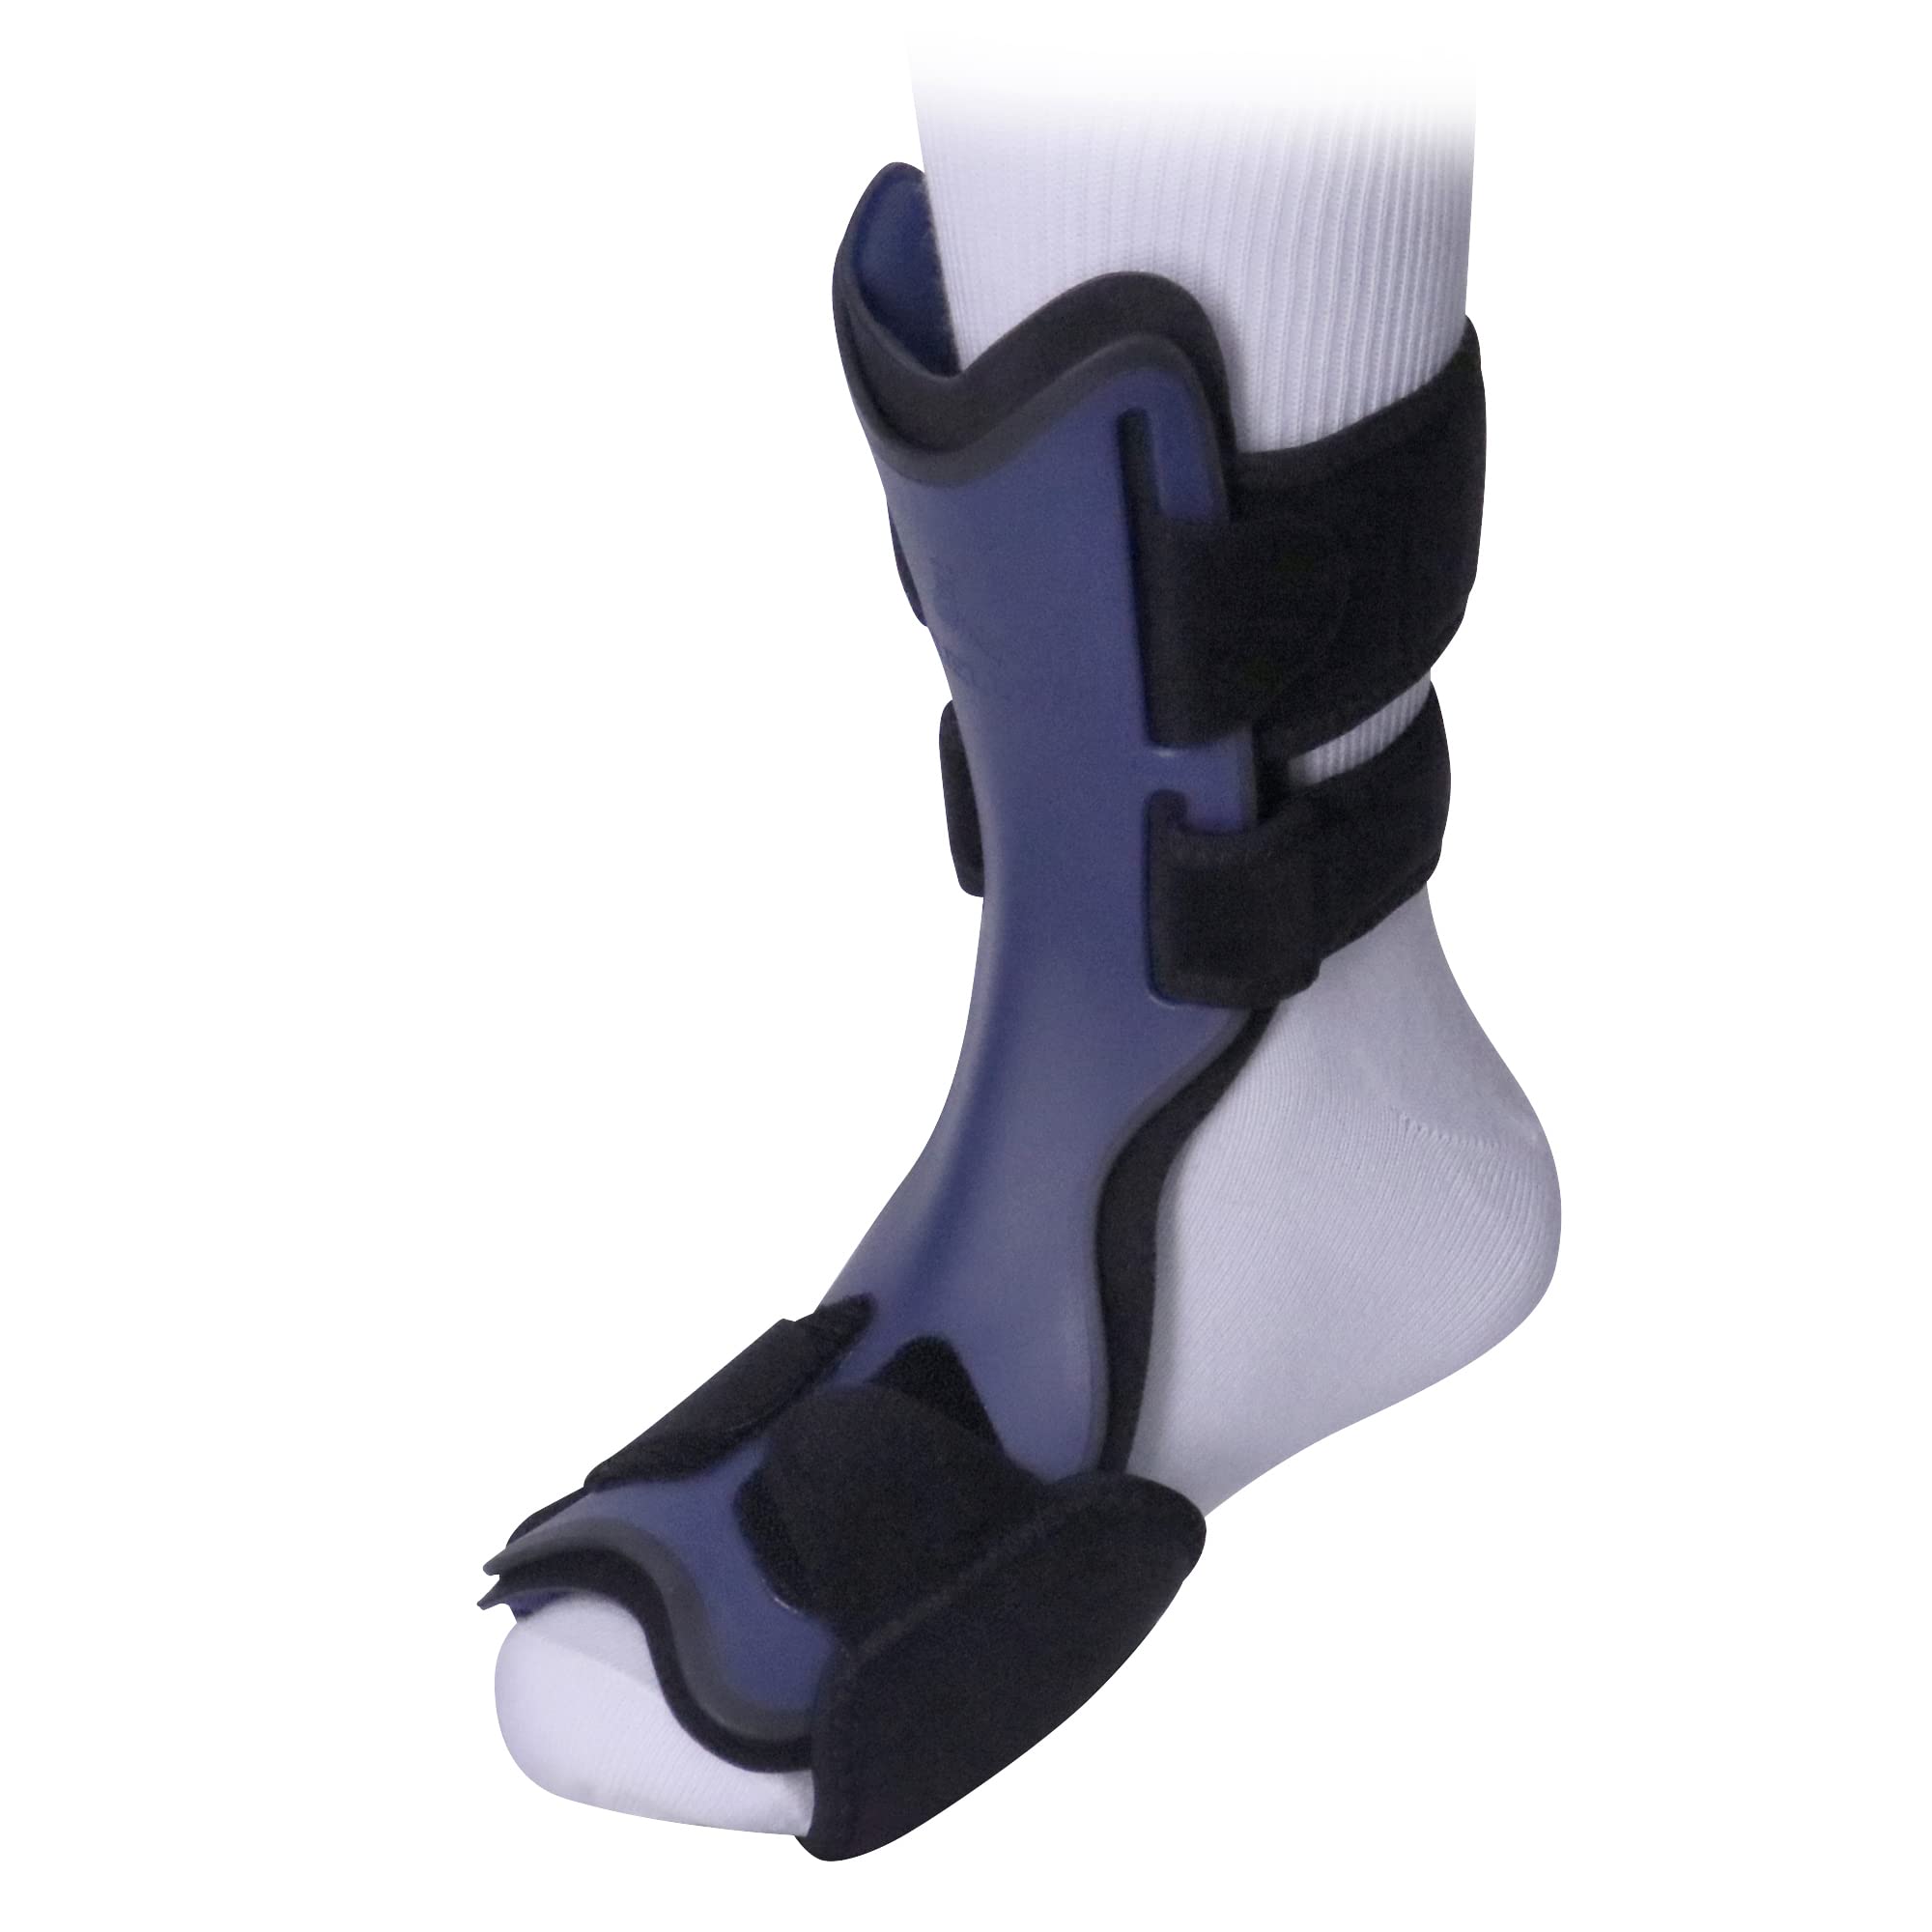 Mueller Sports Medicine Adjustable Plantar Fasciitis Night Splint, Helps Relieve Plantar Fasciitis, Achilles Tendonitis Foot Support Brace & Heel Pain, Unisex, Right/Left, One Size, Blue